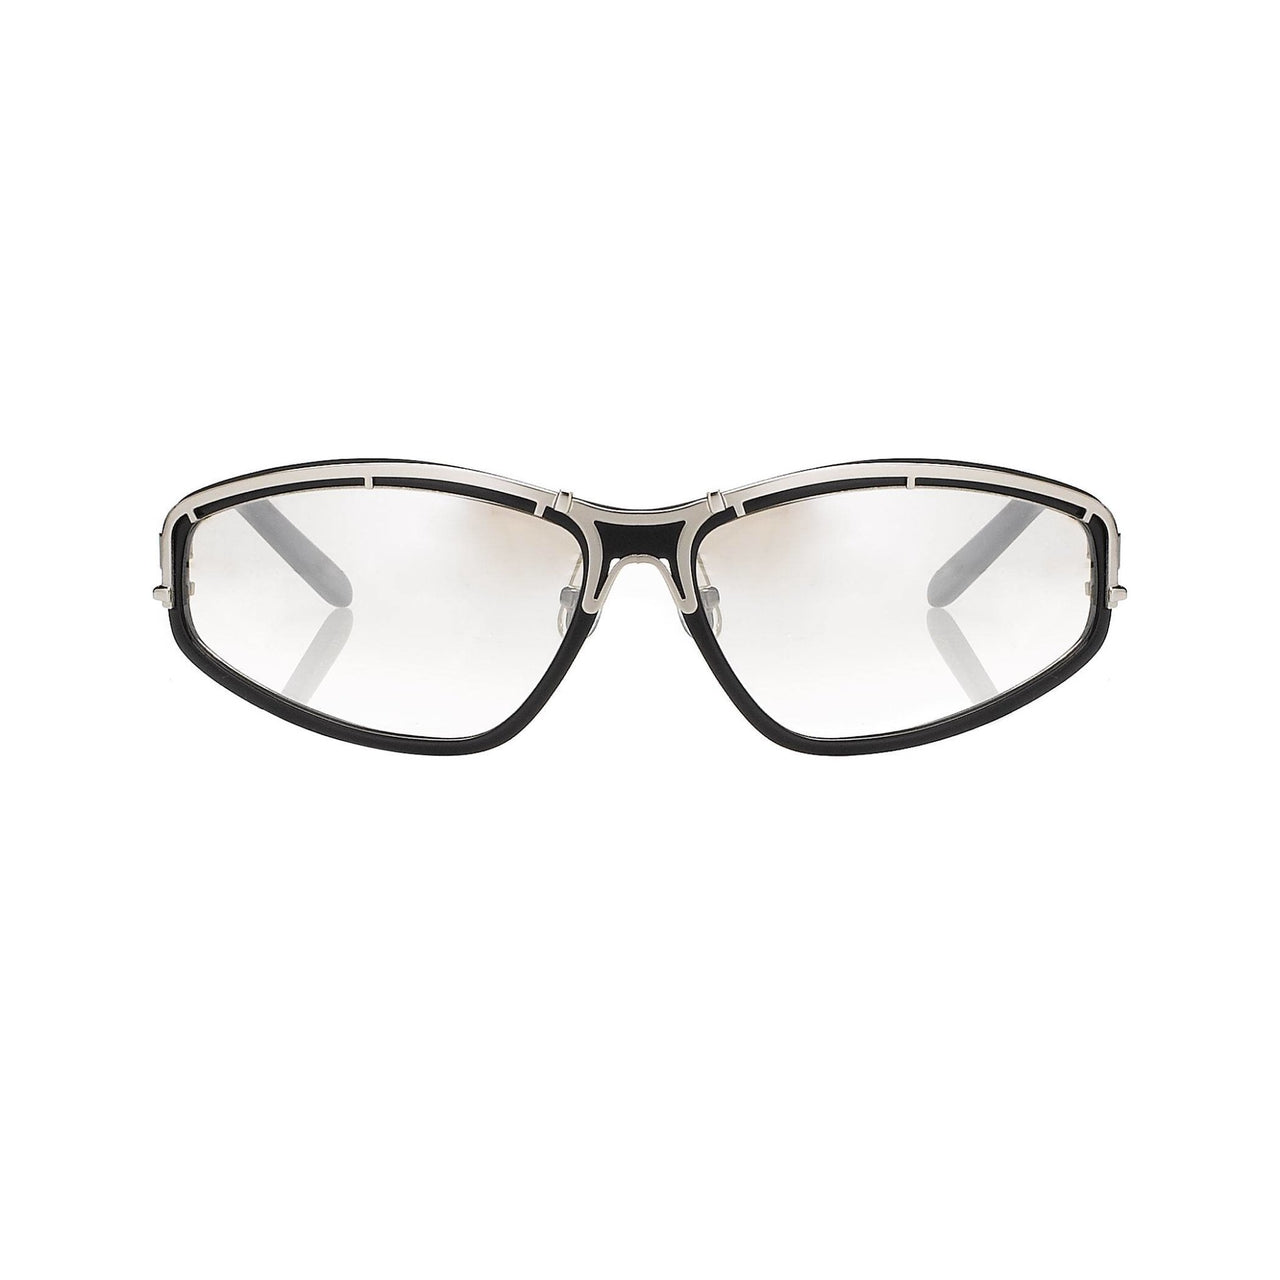 Yohji Yamamoto Unisex Sunglasses Rectangular Black and Light Brown Mirror Graduated Lenses - 9YY900C1BLACK - Watches & Crystals